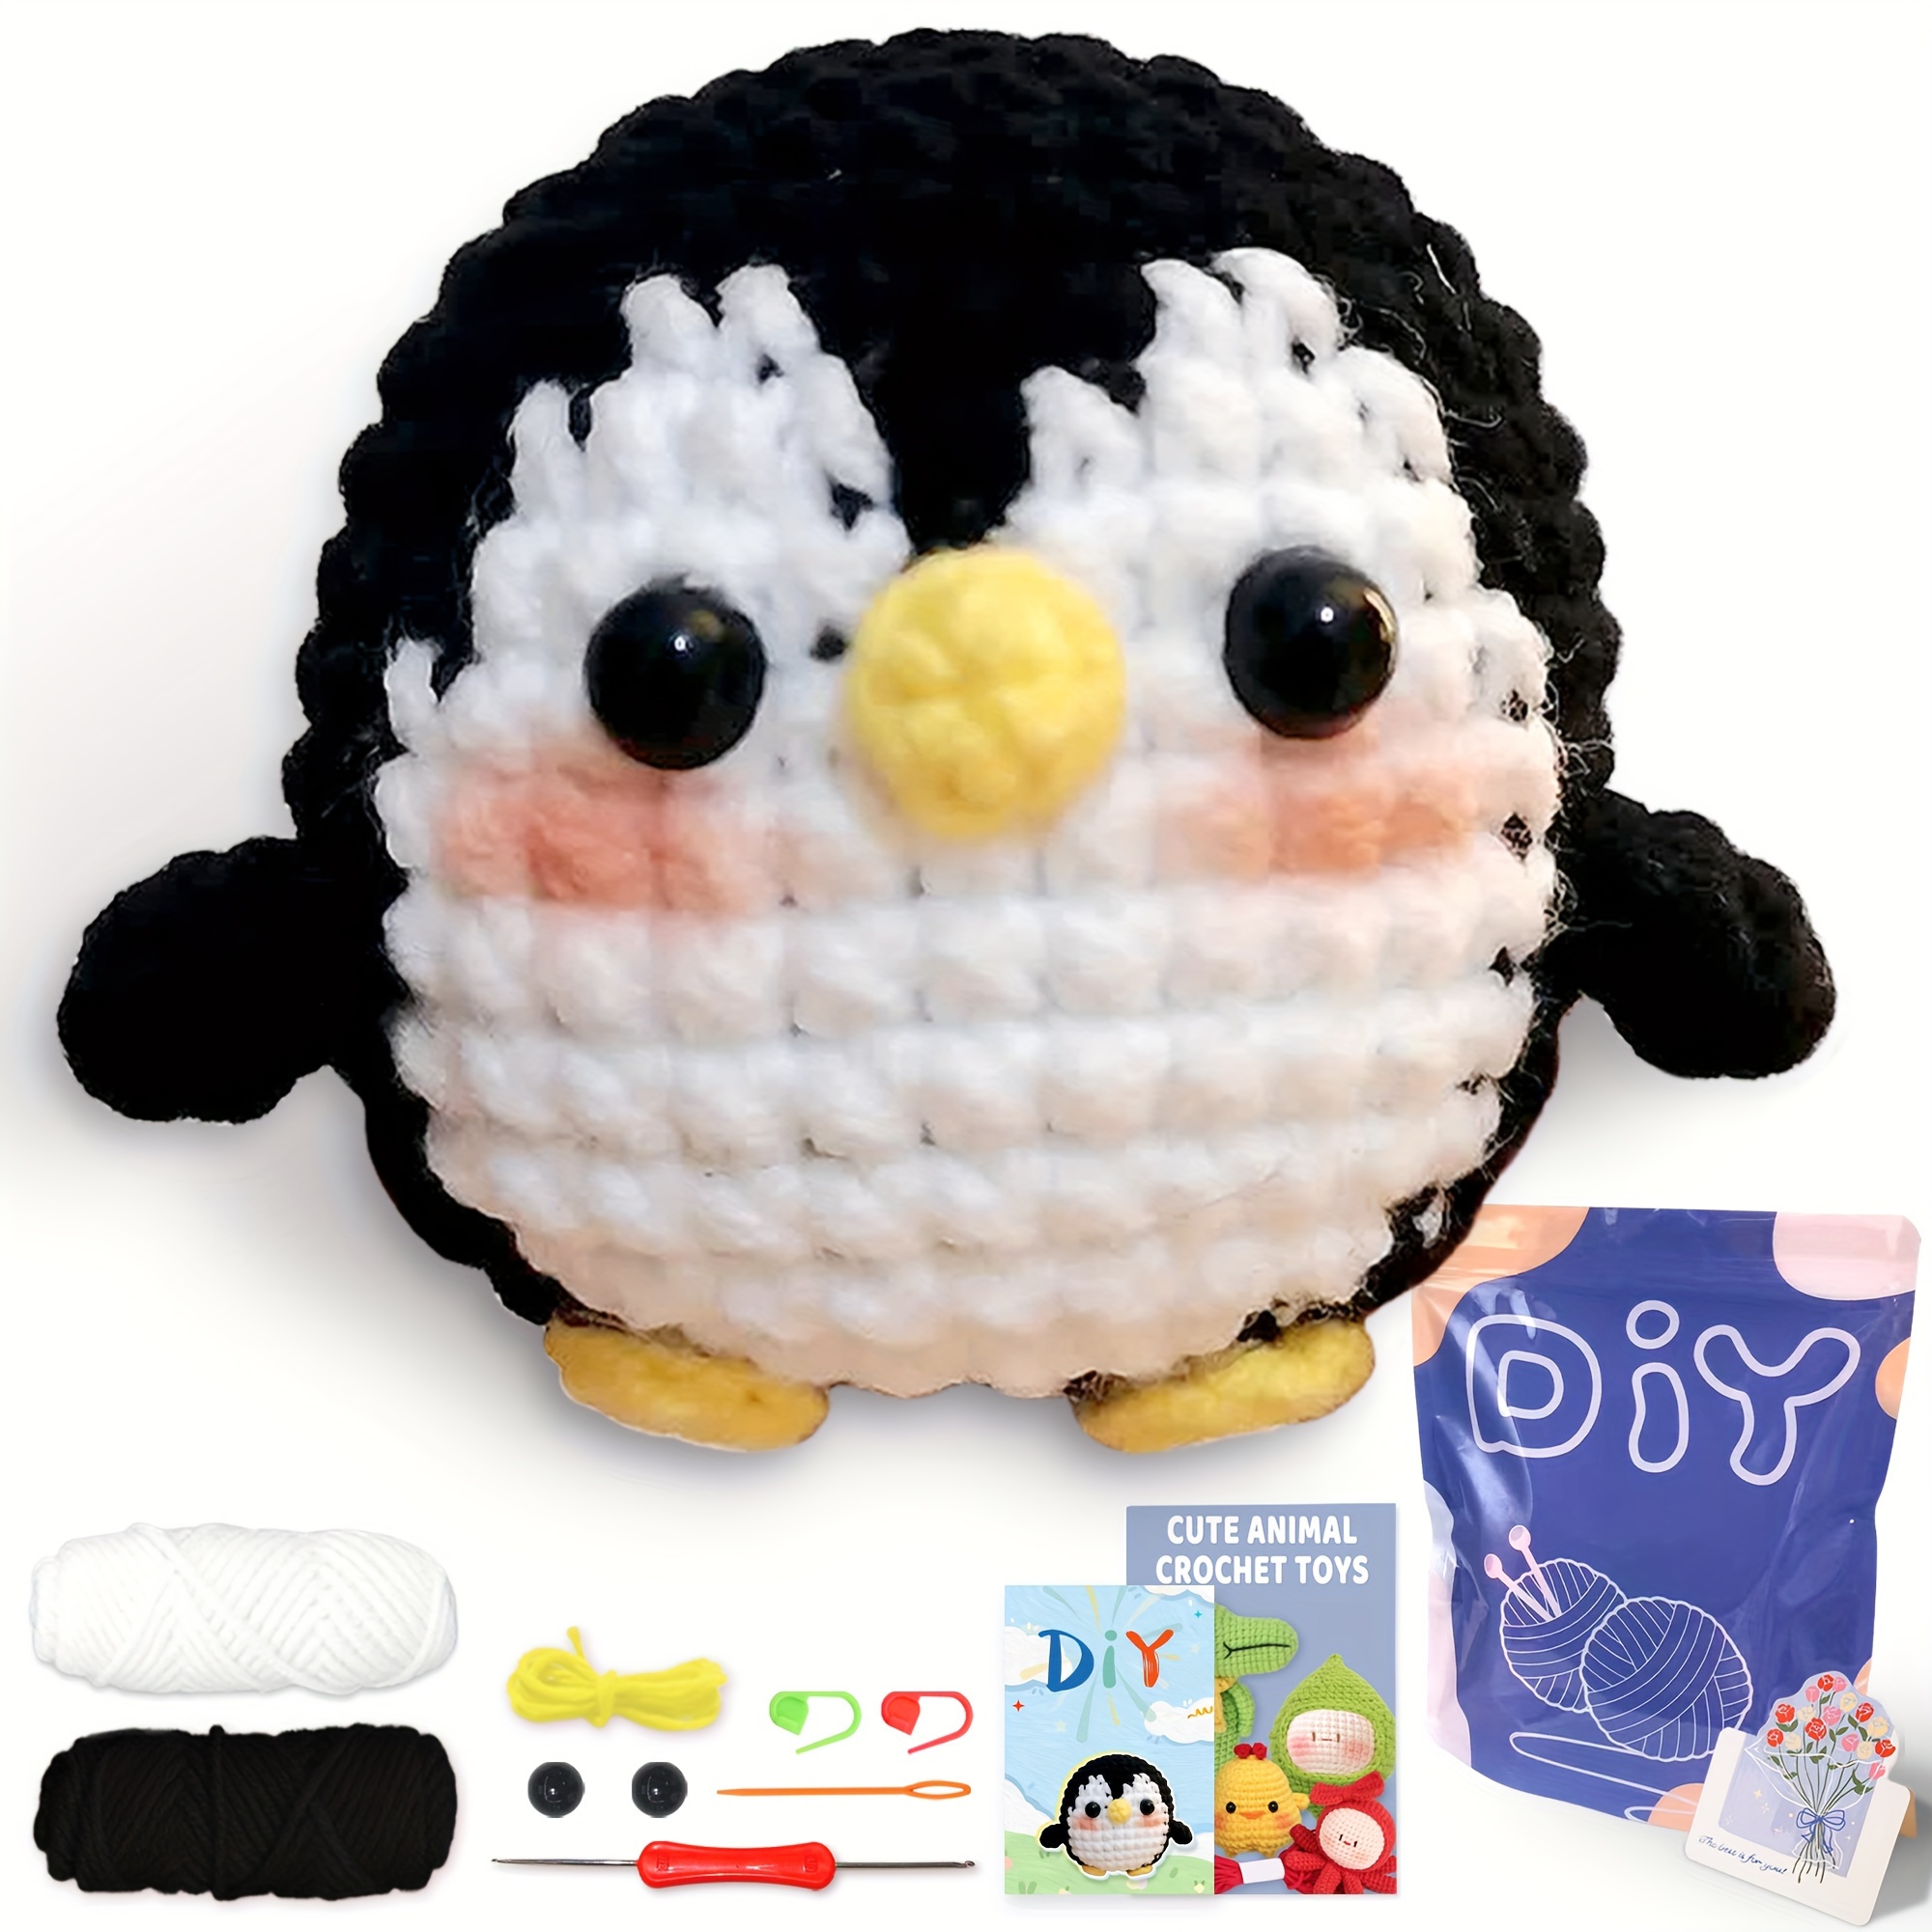 

1set New Crochet Material Package Contains English Instruction Manual, Beginner Crochet Yarn Kit For Adults, Knitting Handmade Diy Cartoon Doll For Beginners Penguin